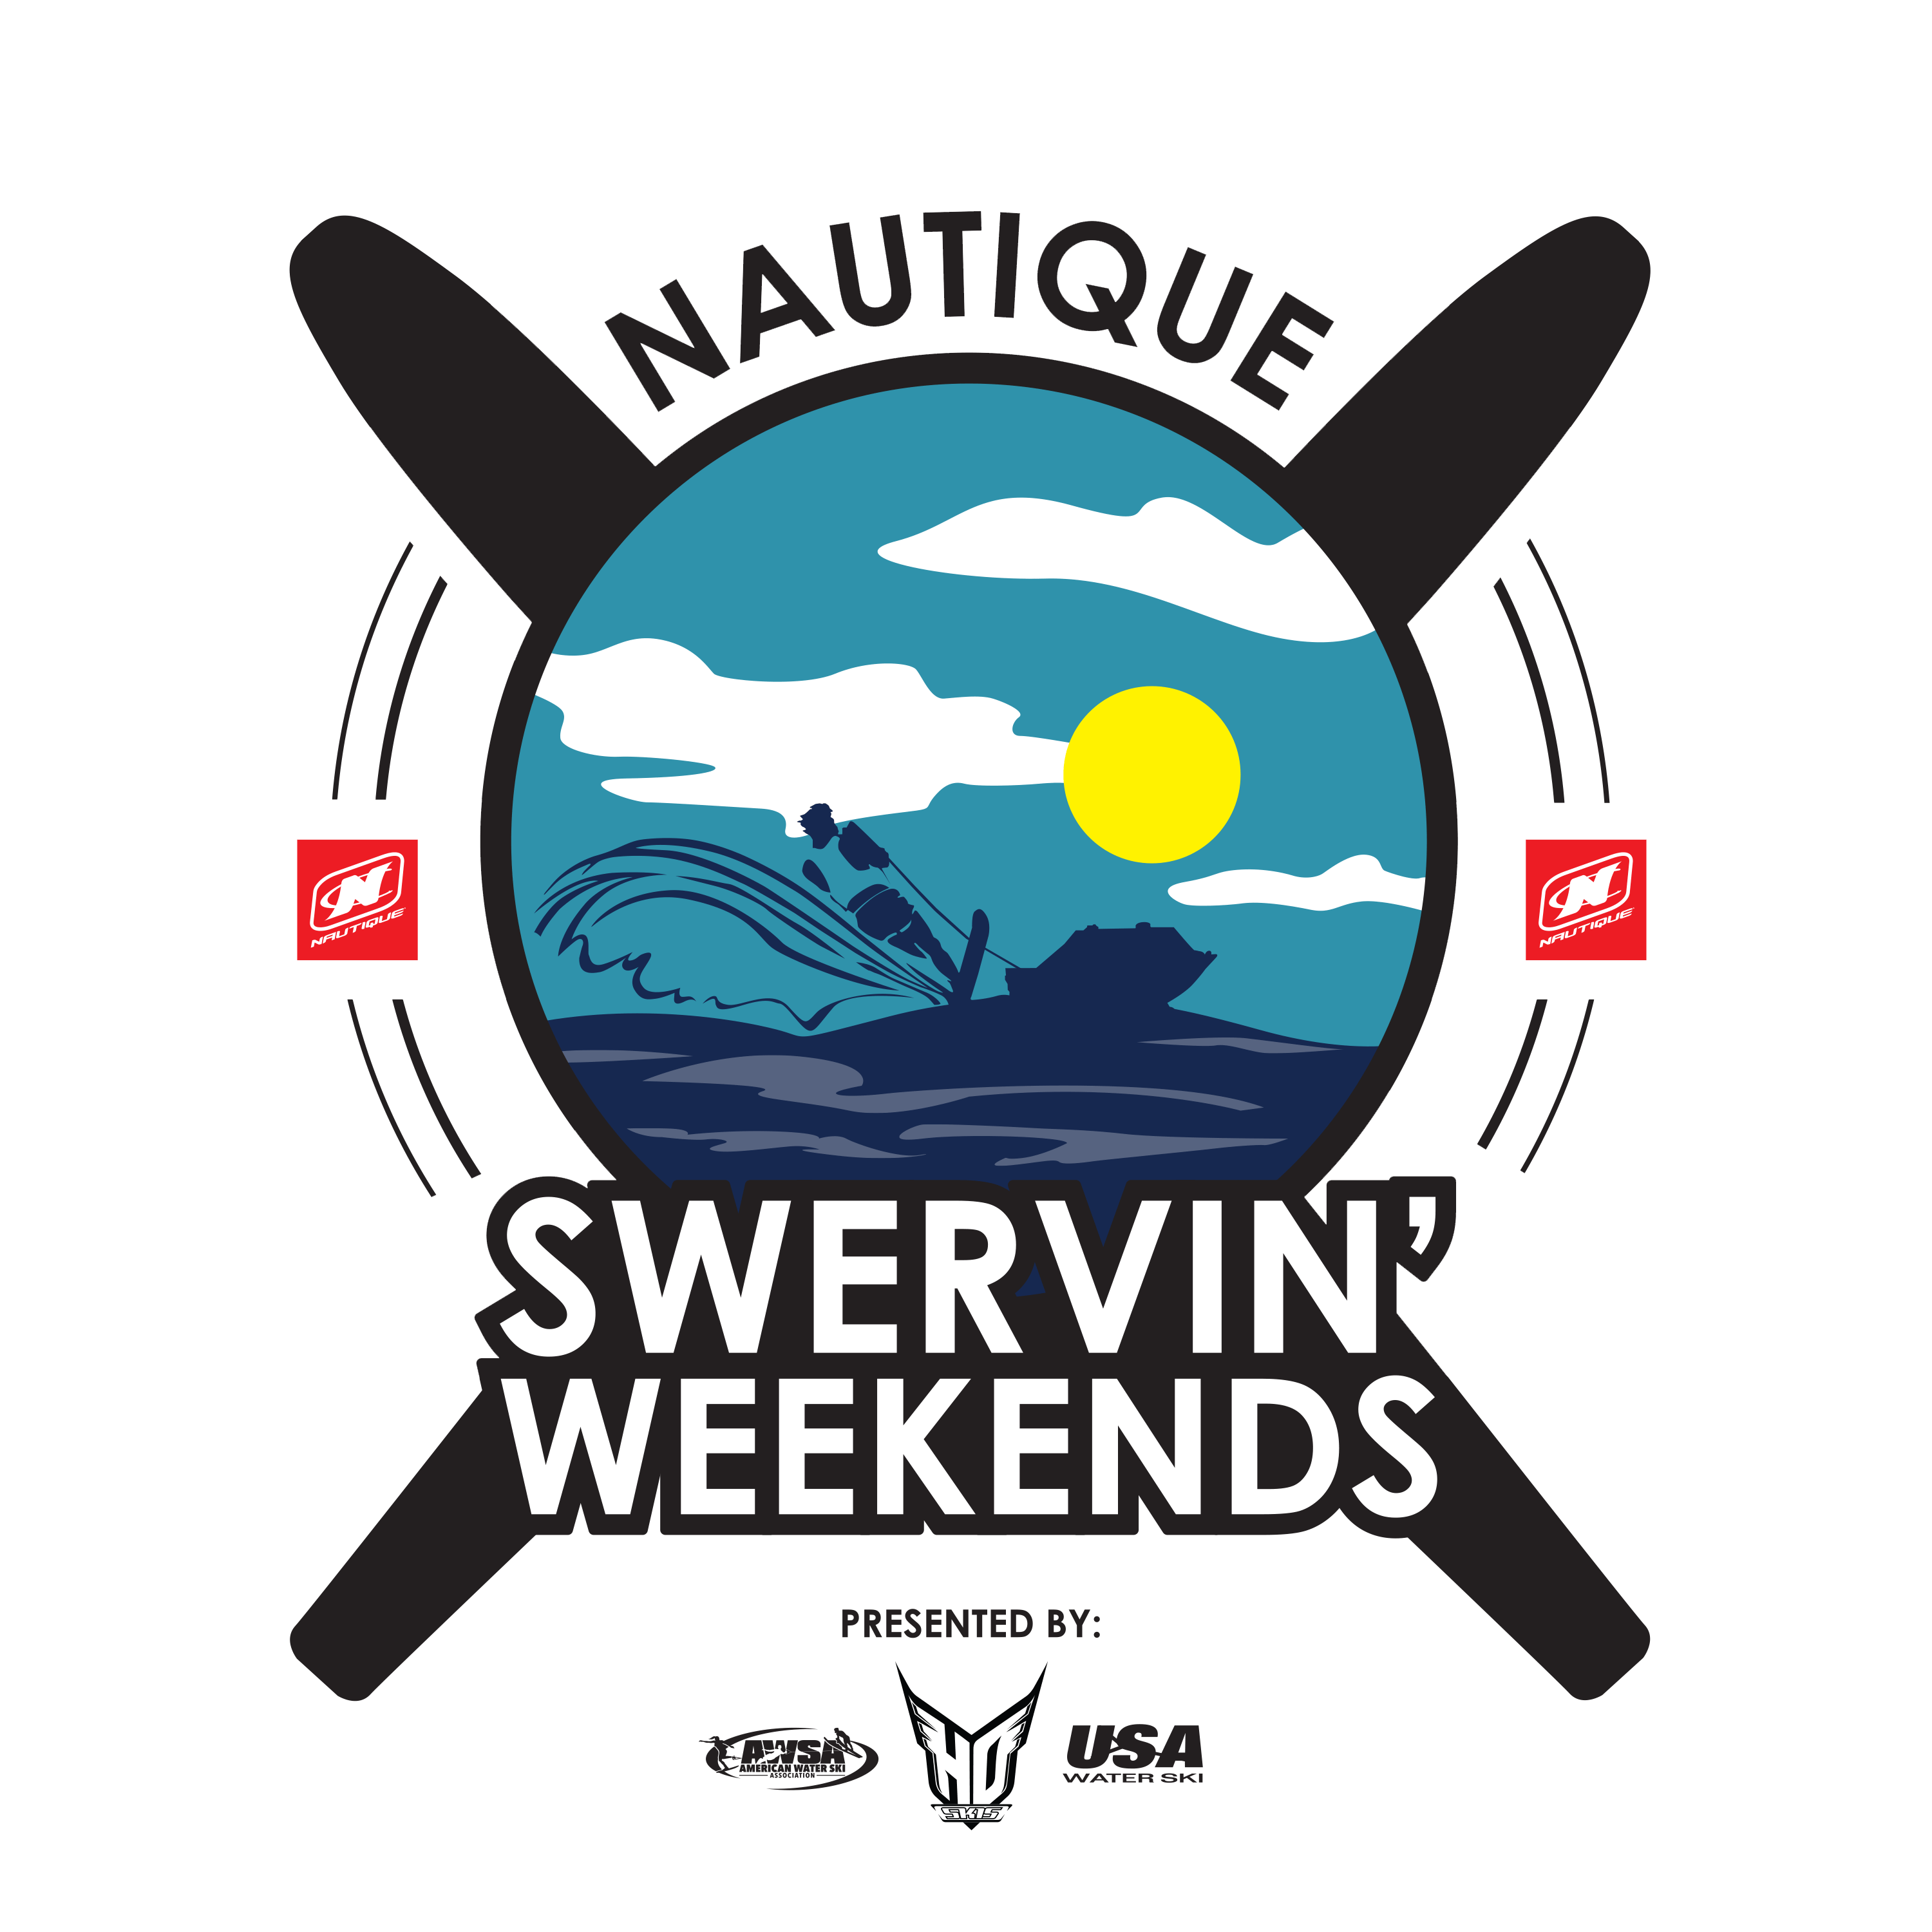 Nautique Logo - INTRODUCING NAUTIQUE SWERVIN' WEEKENDS! – Correct Craft